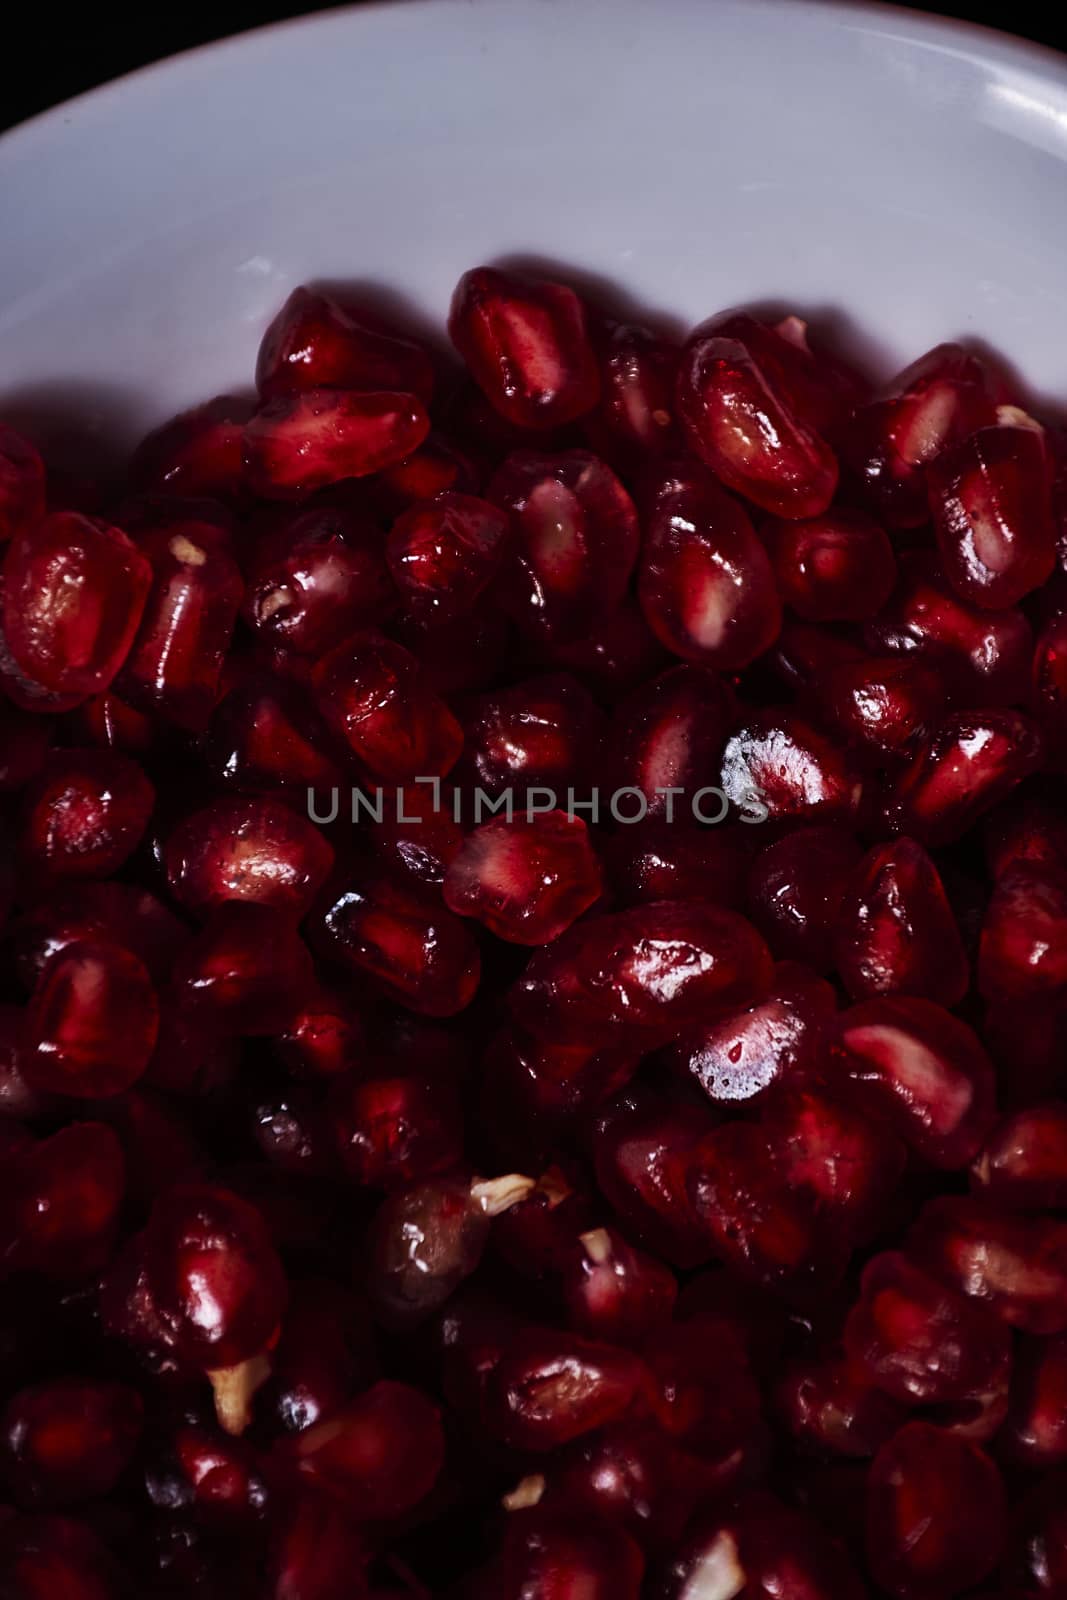 Pomegranate seeds close-up, Black background, macro photography